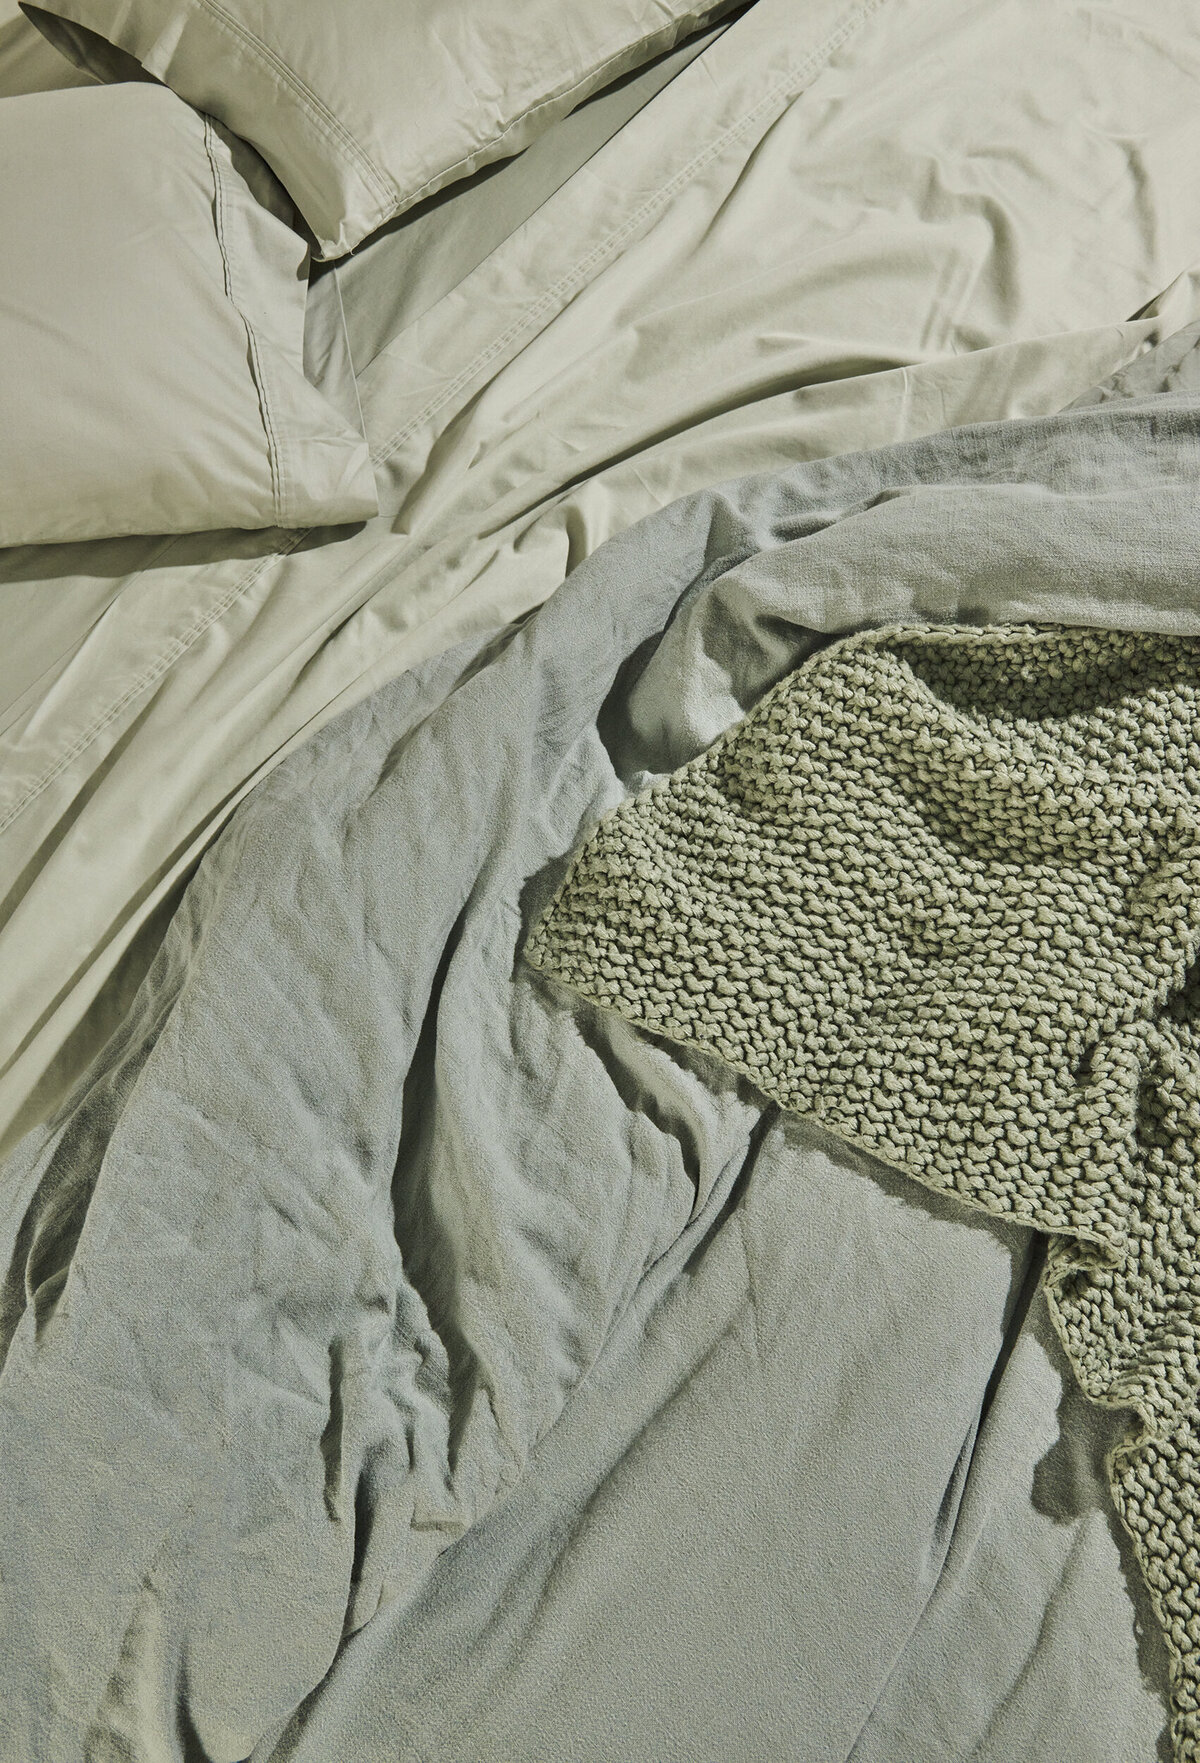 los-angeles-product-photographer-bedding-blanket-lifestyle-photography-lindsay-kreighbaum-texture-macro-7